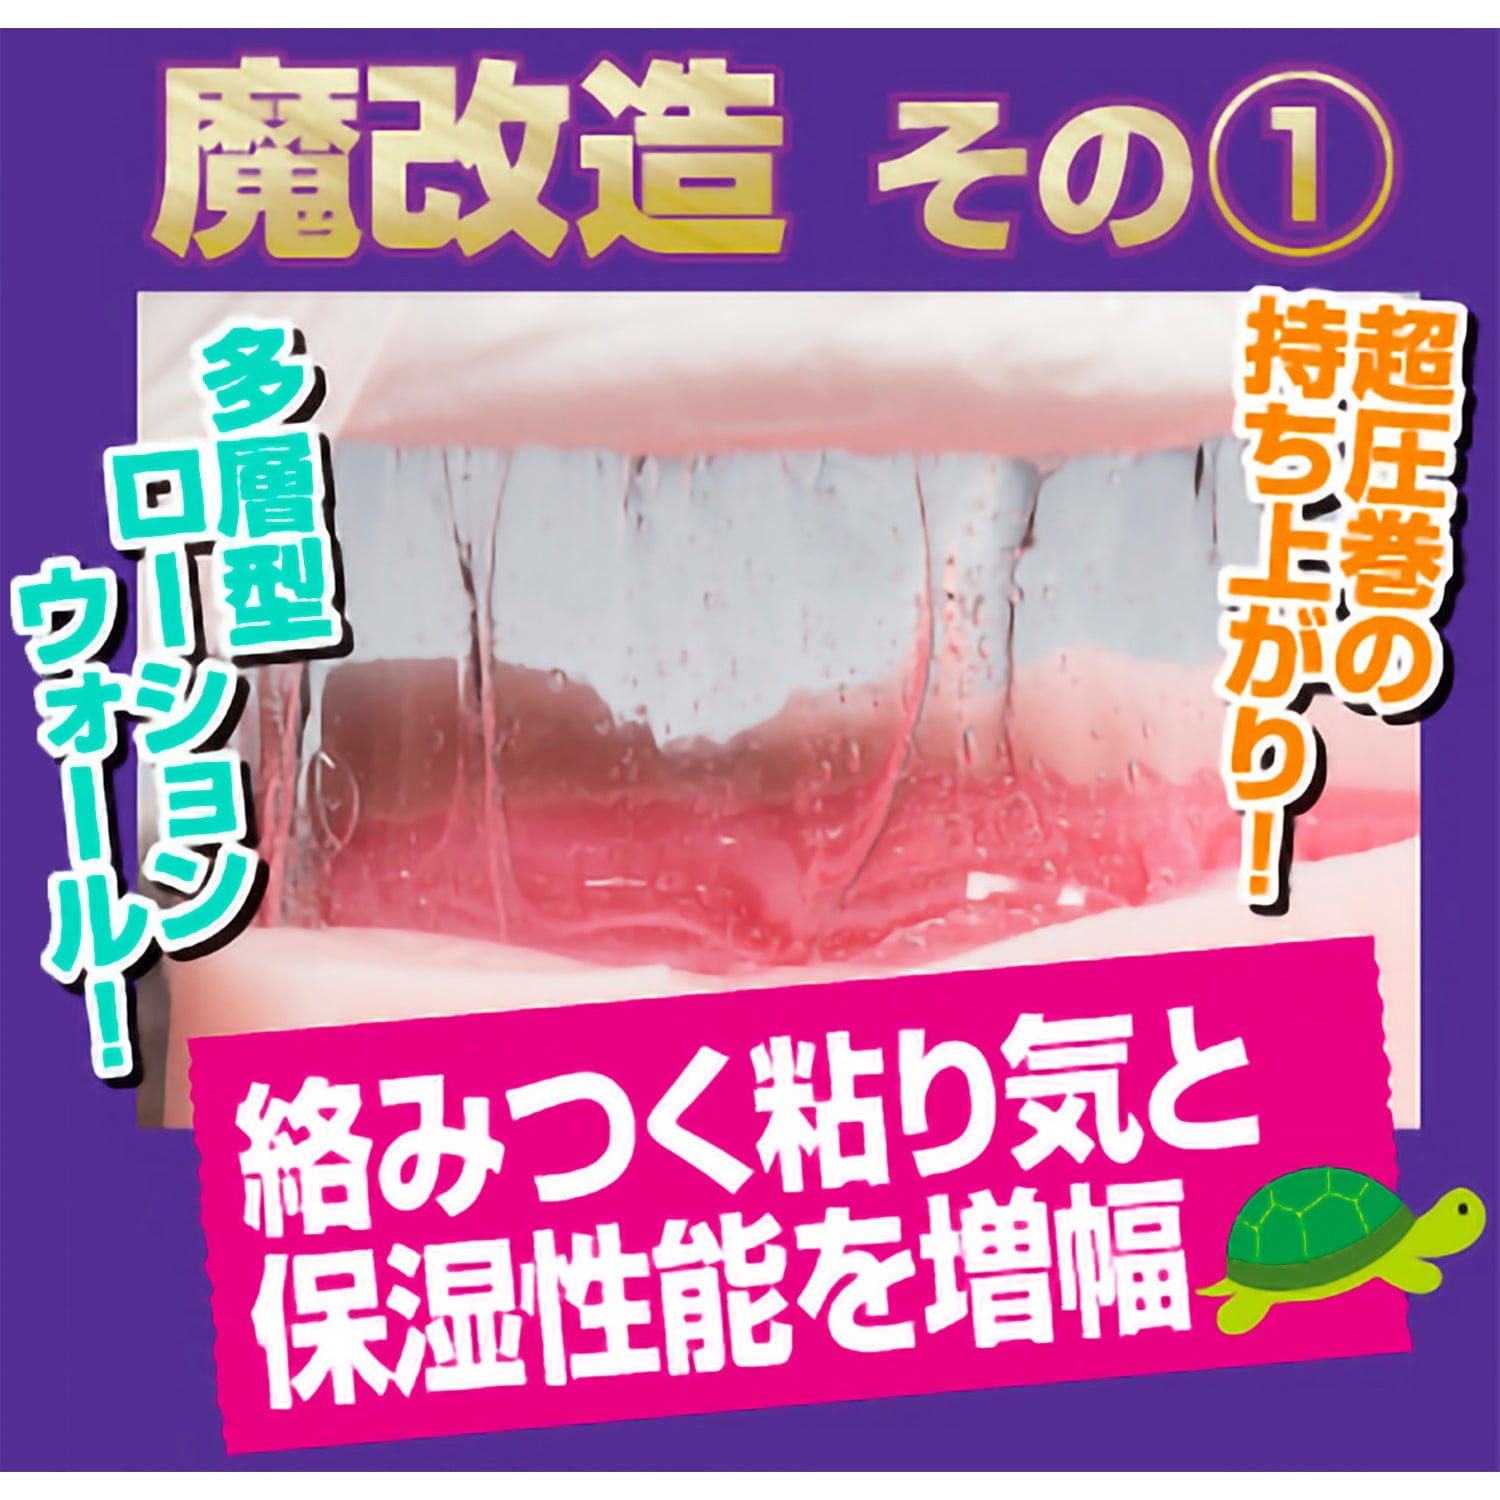 NPG - Soft Boiled Succubus Magic Modified Lotion Yumenoshiori New Nakano Lubricant 600ml -  Lube (Water Based)  Durio.sg